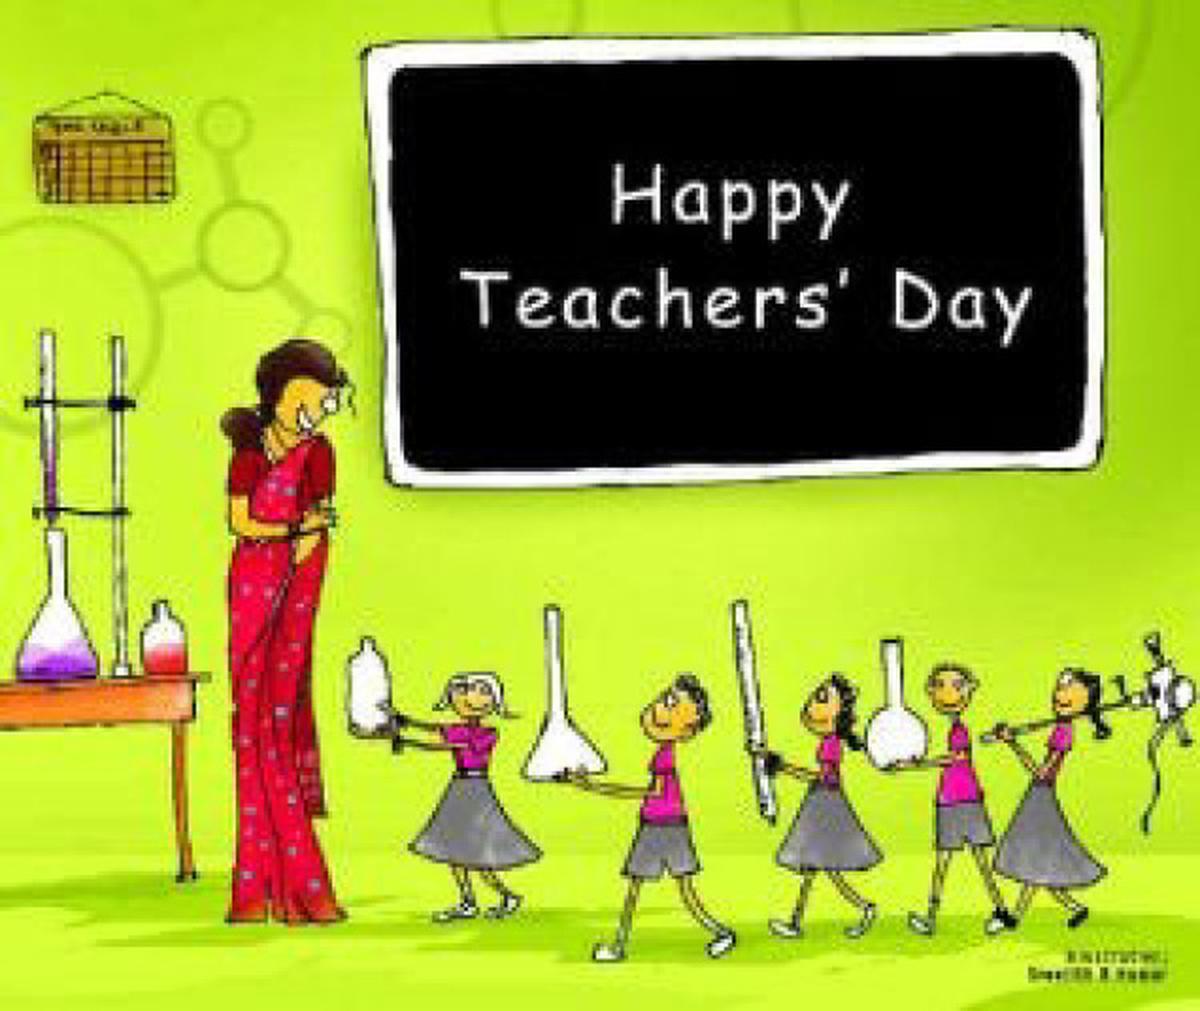 Happy Teachers’ Day - The Hindu